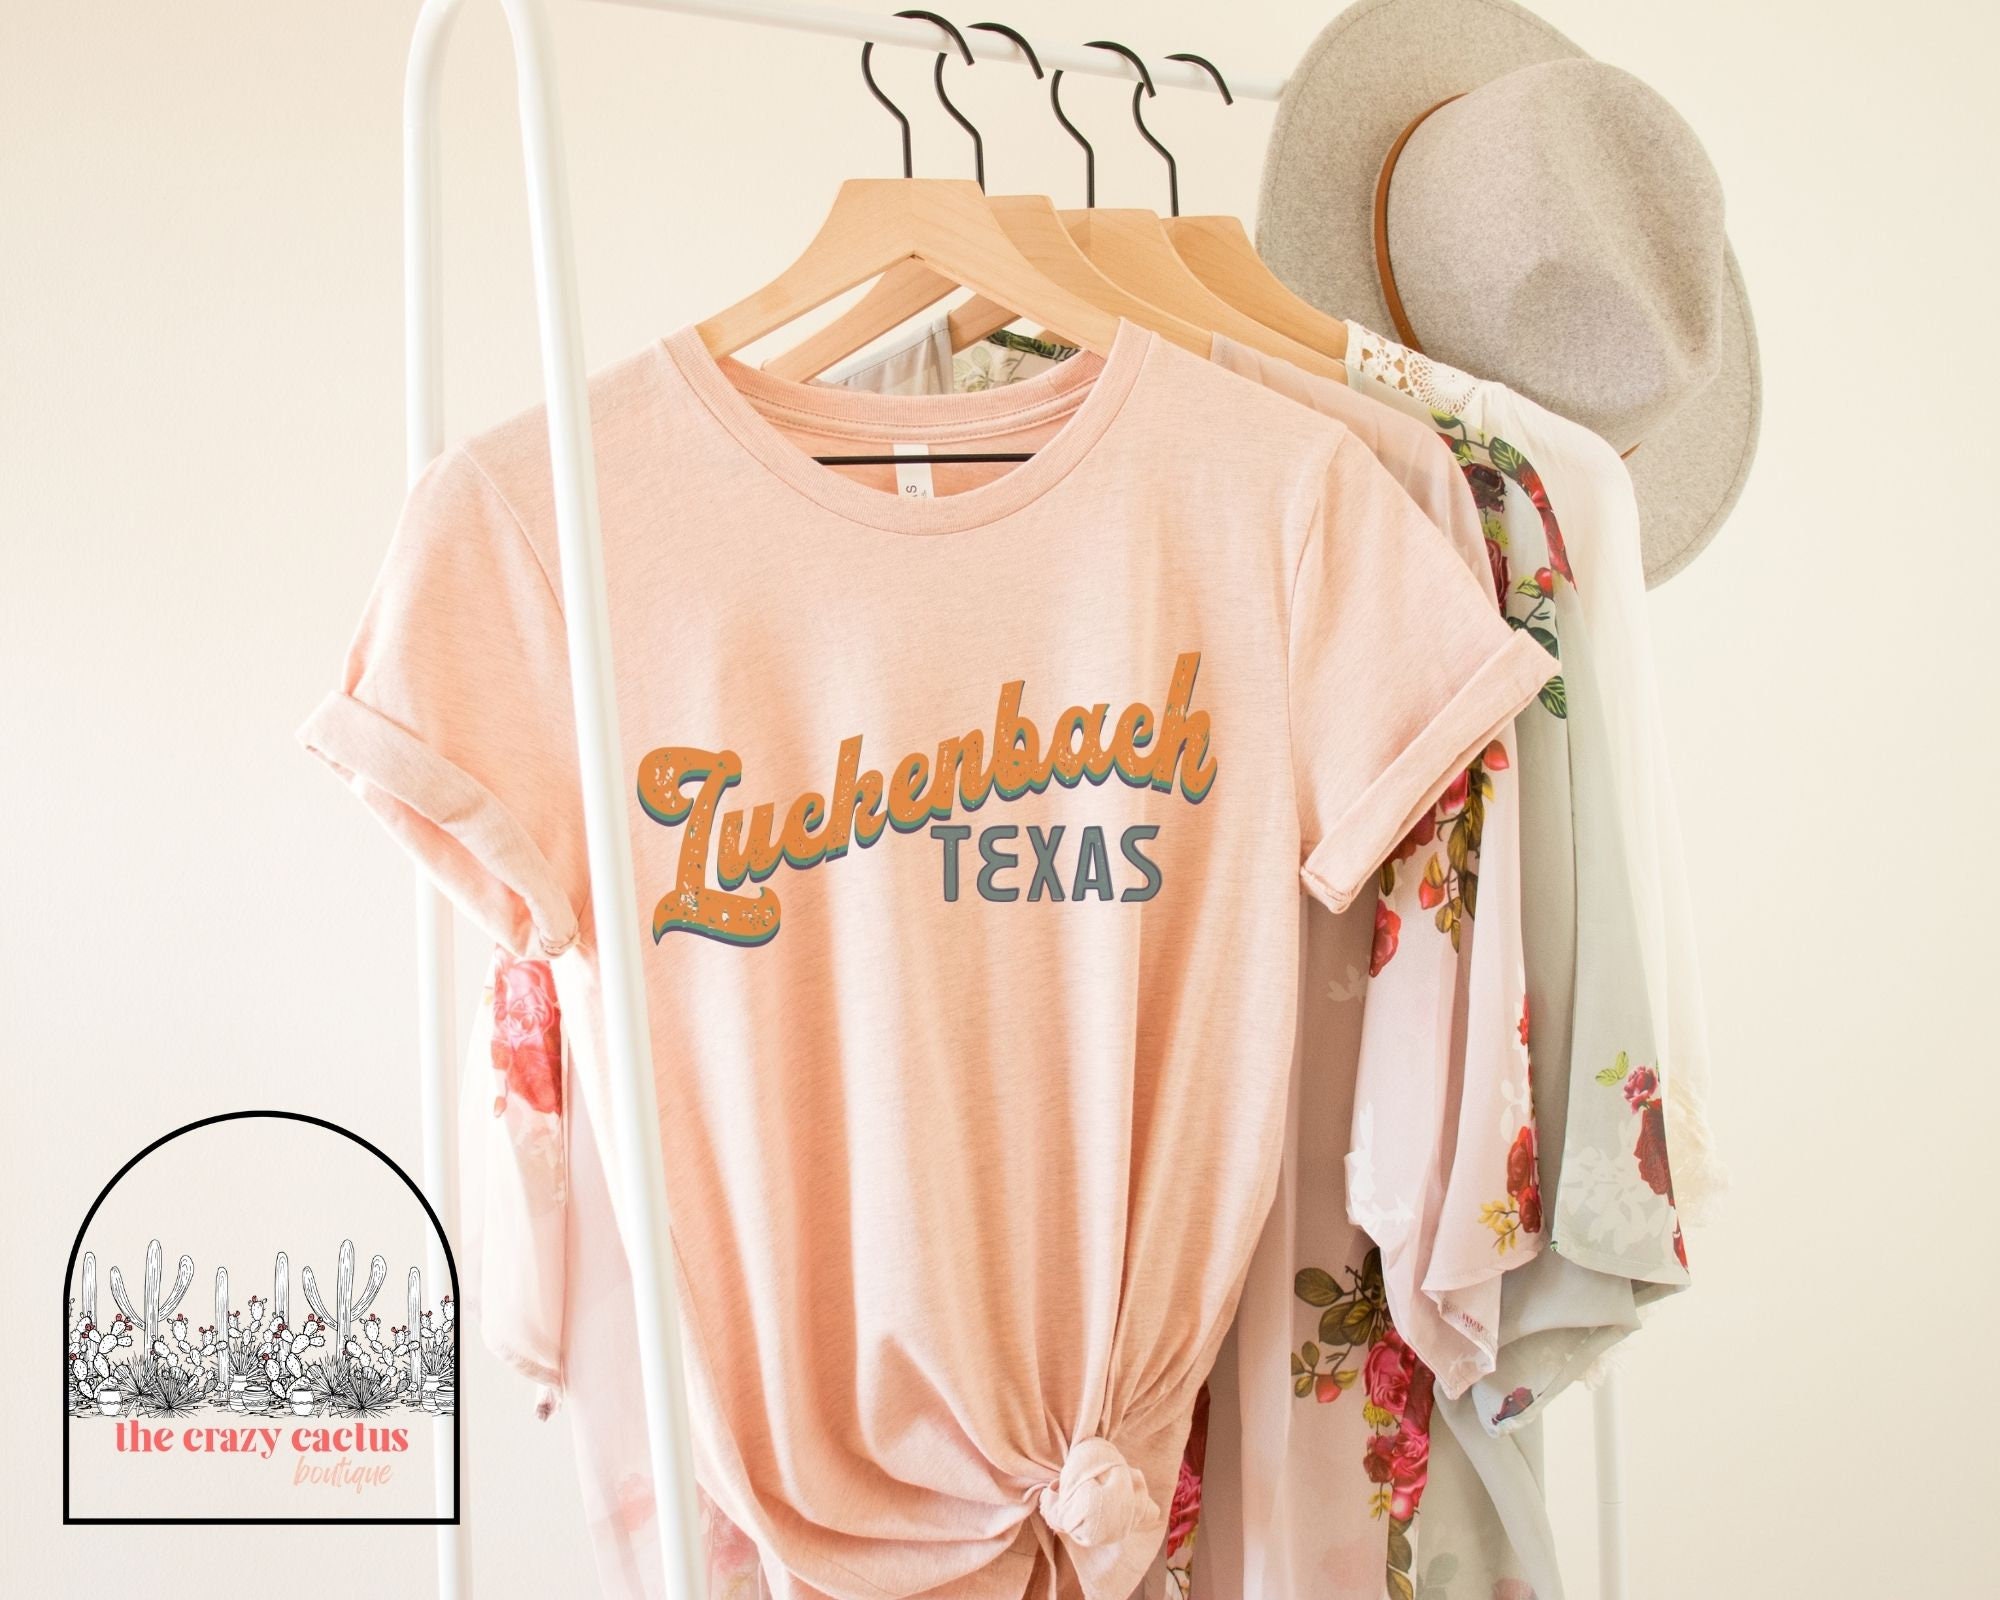 Discover Luckenbach, Texas Shirt, Mens T-shirts, Women's T-shirts, Gifts for Men Women, Waylon Jennings, Classic Country, Concert tee, Festival shirt